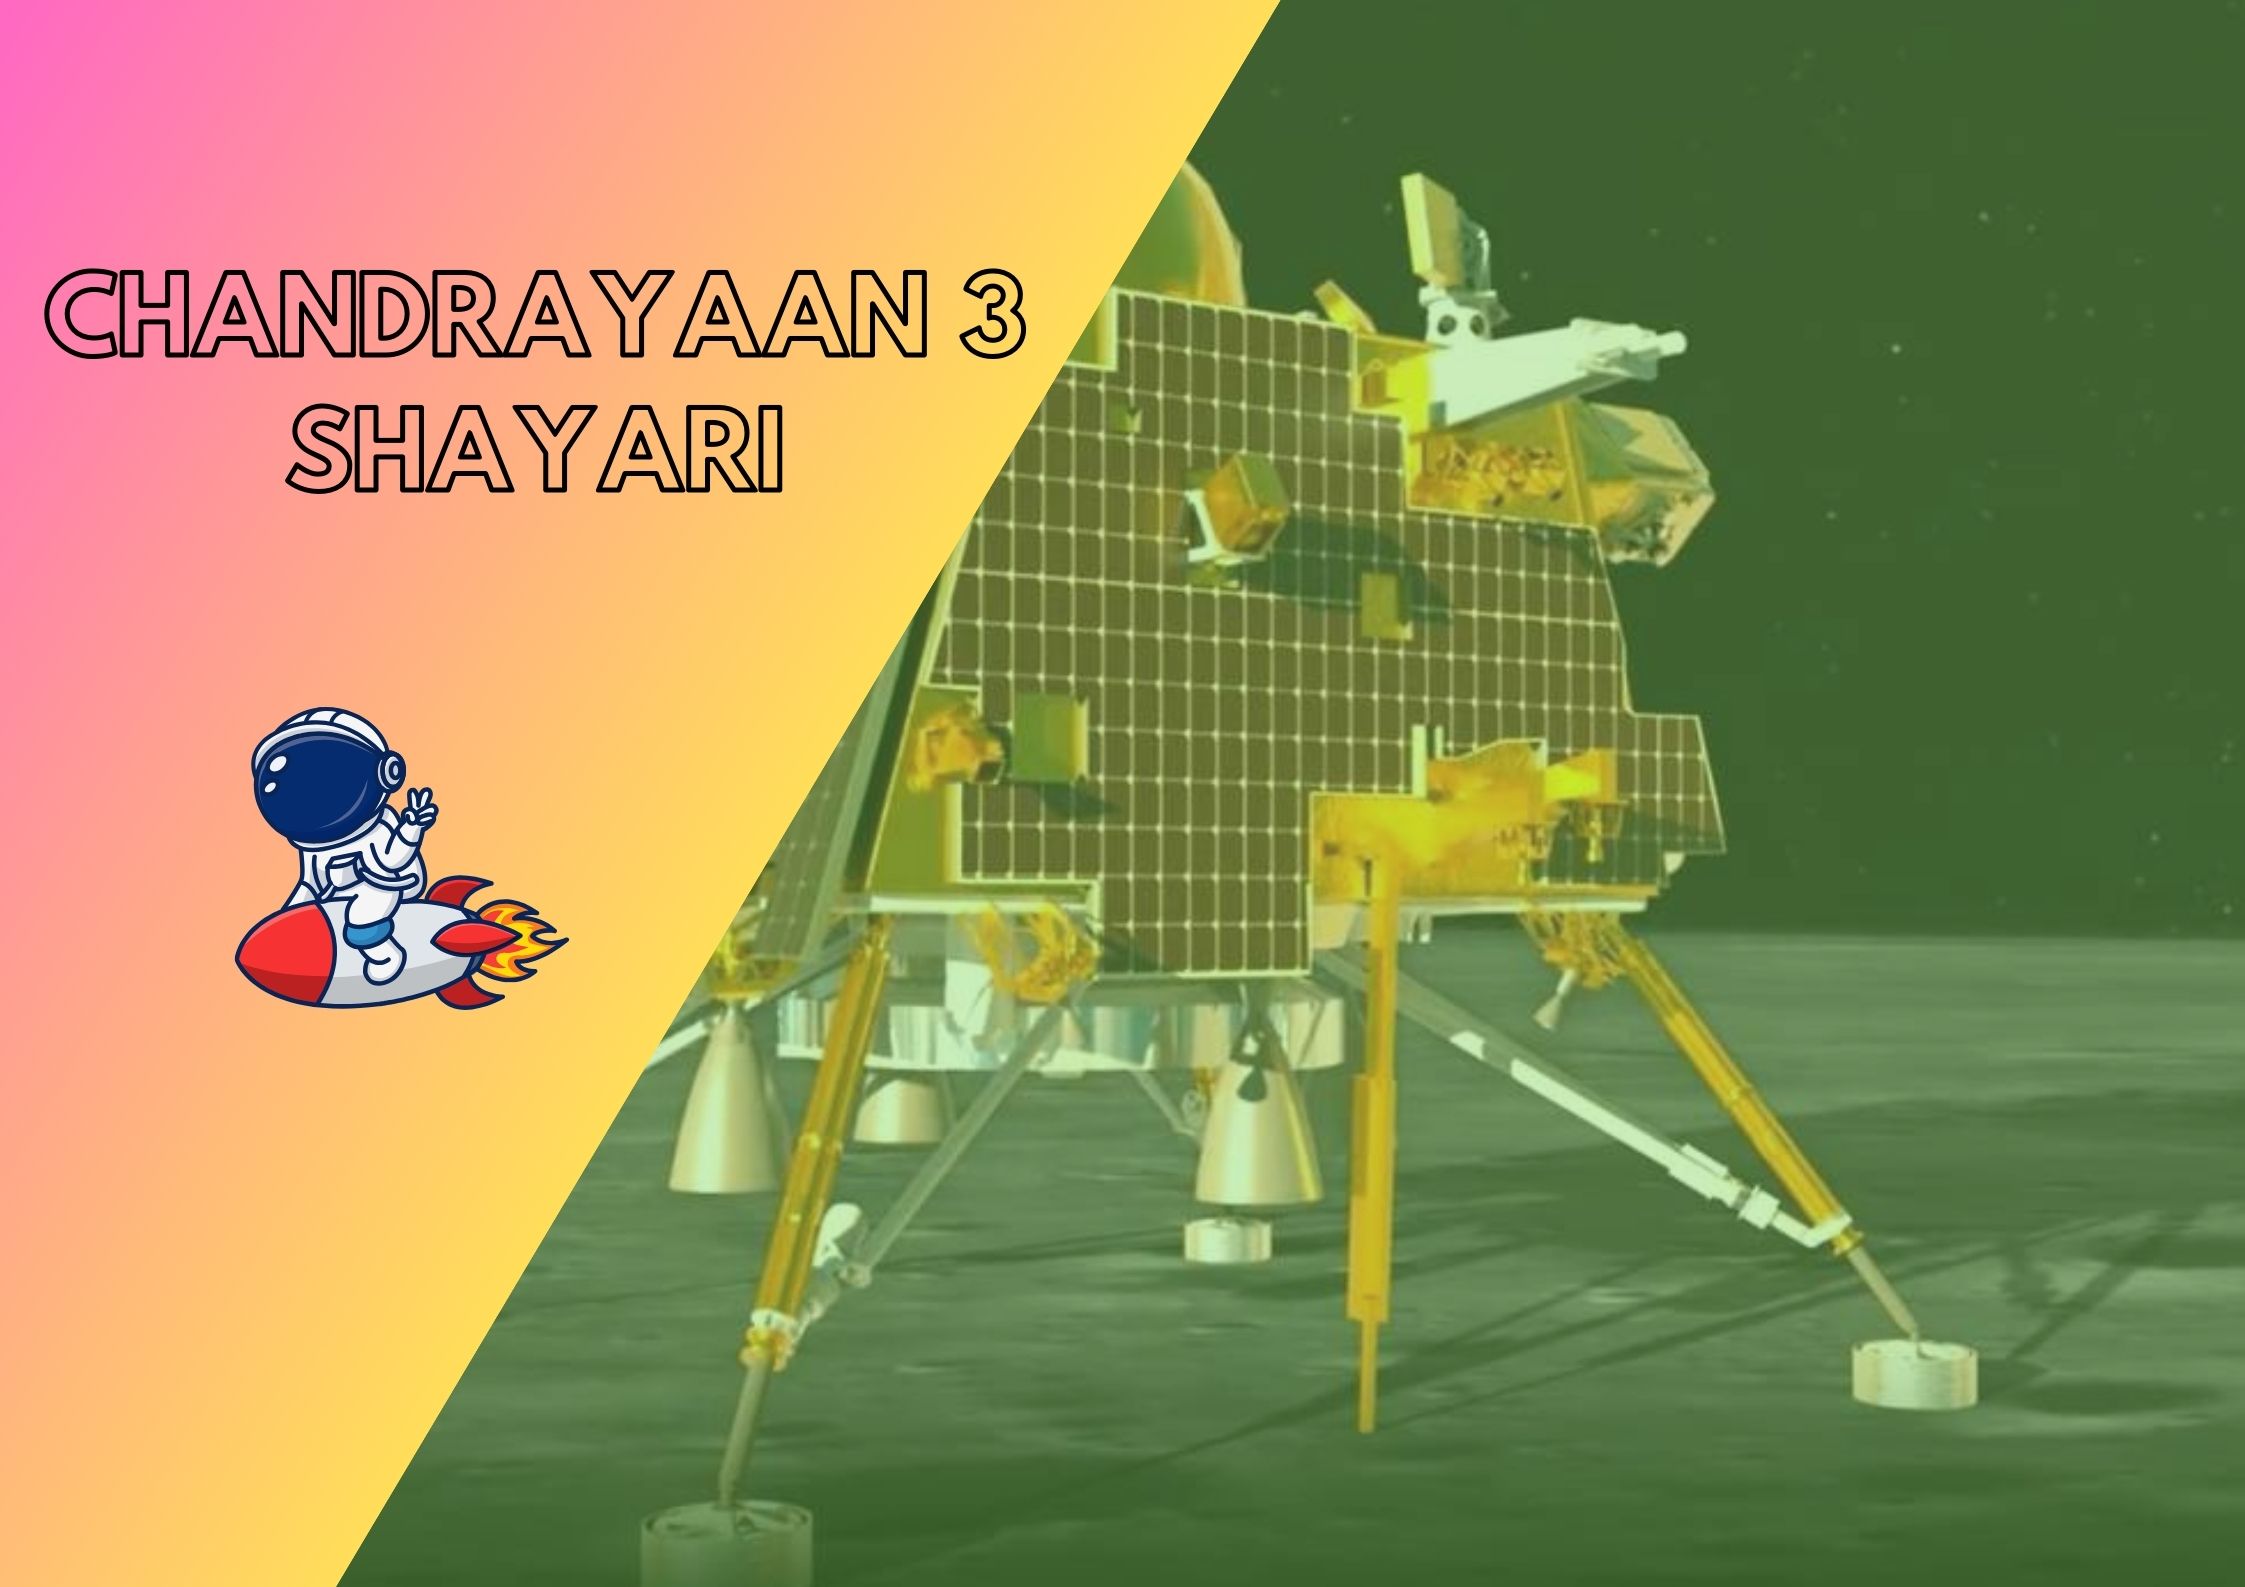 Chandrayaan 3 Shayari in Hindi | चंद्रयान 3 पर शायरी स्टेटस